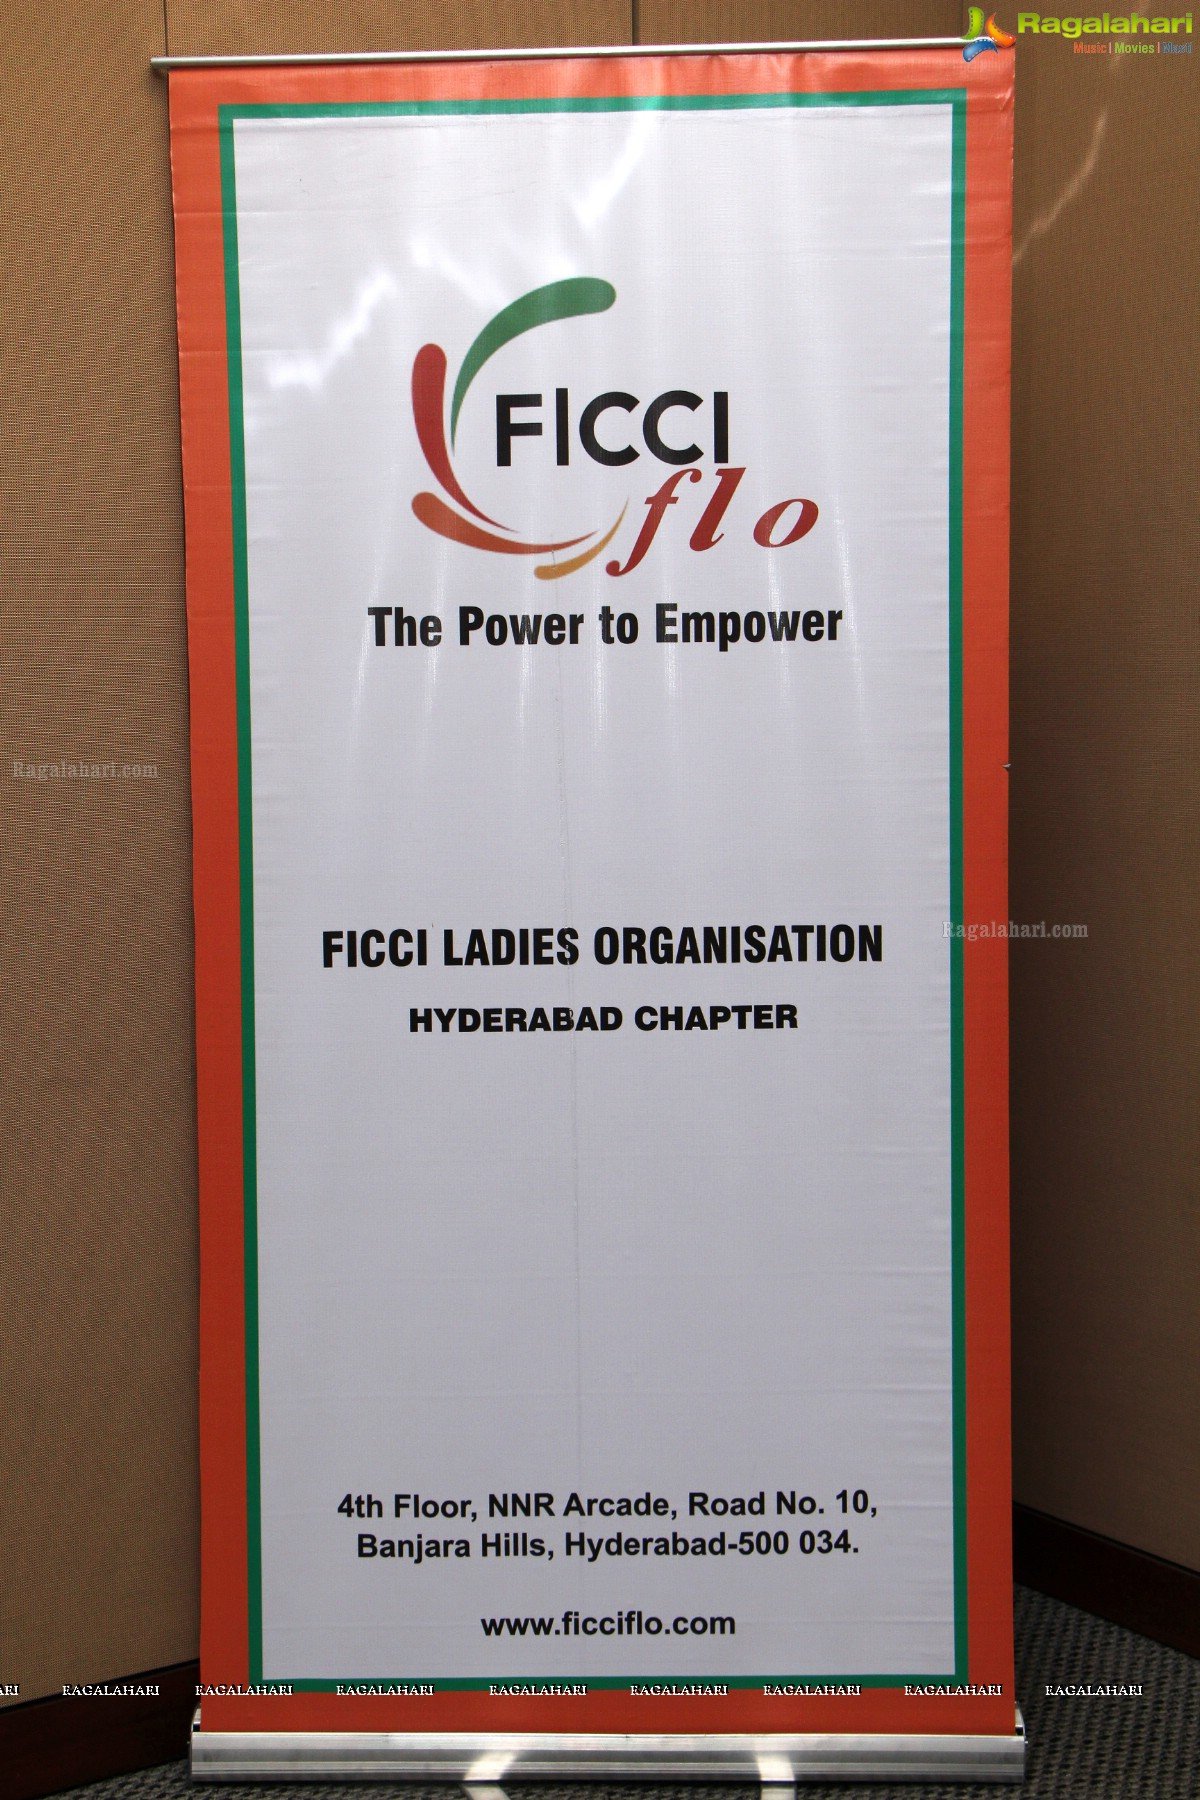 FICCI Ladies Organization Workshop on 